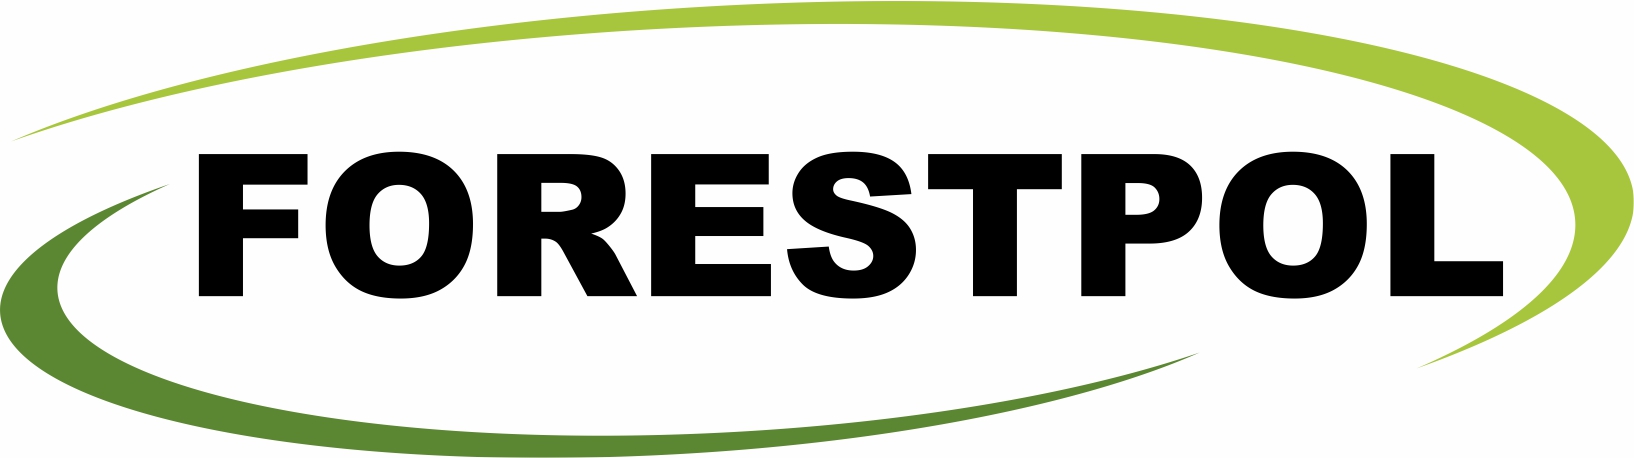 Forestpol-logo